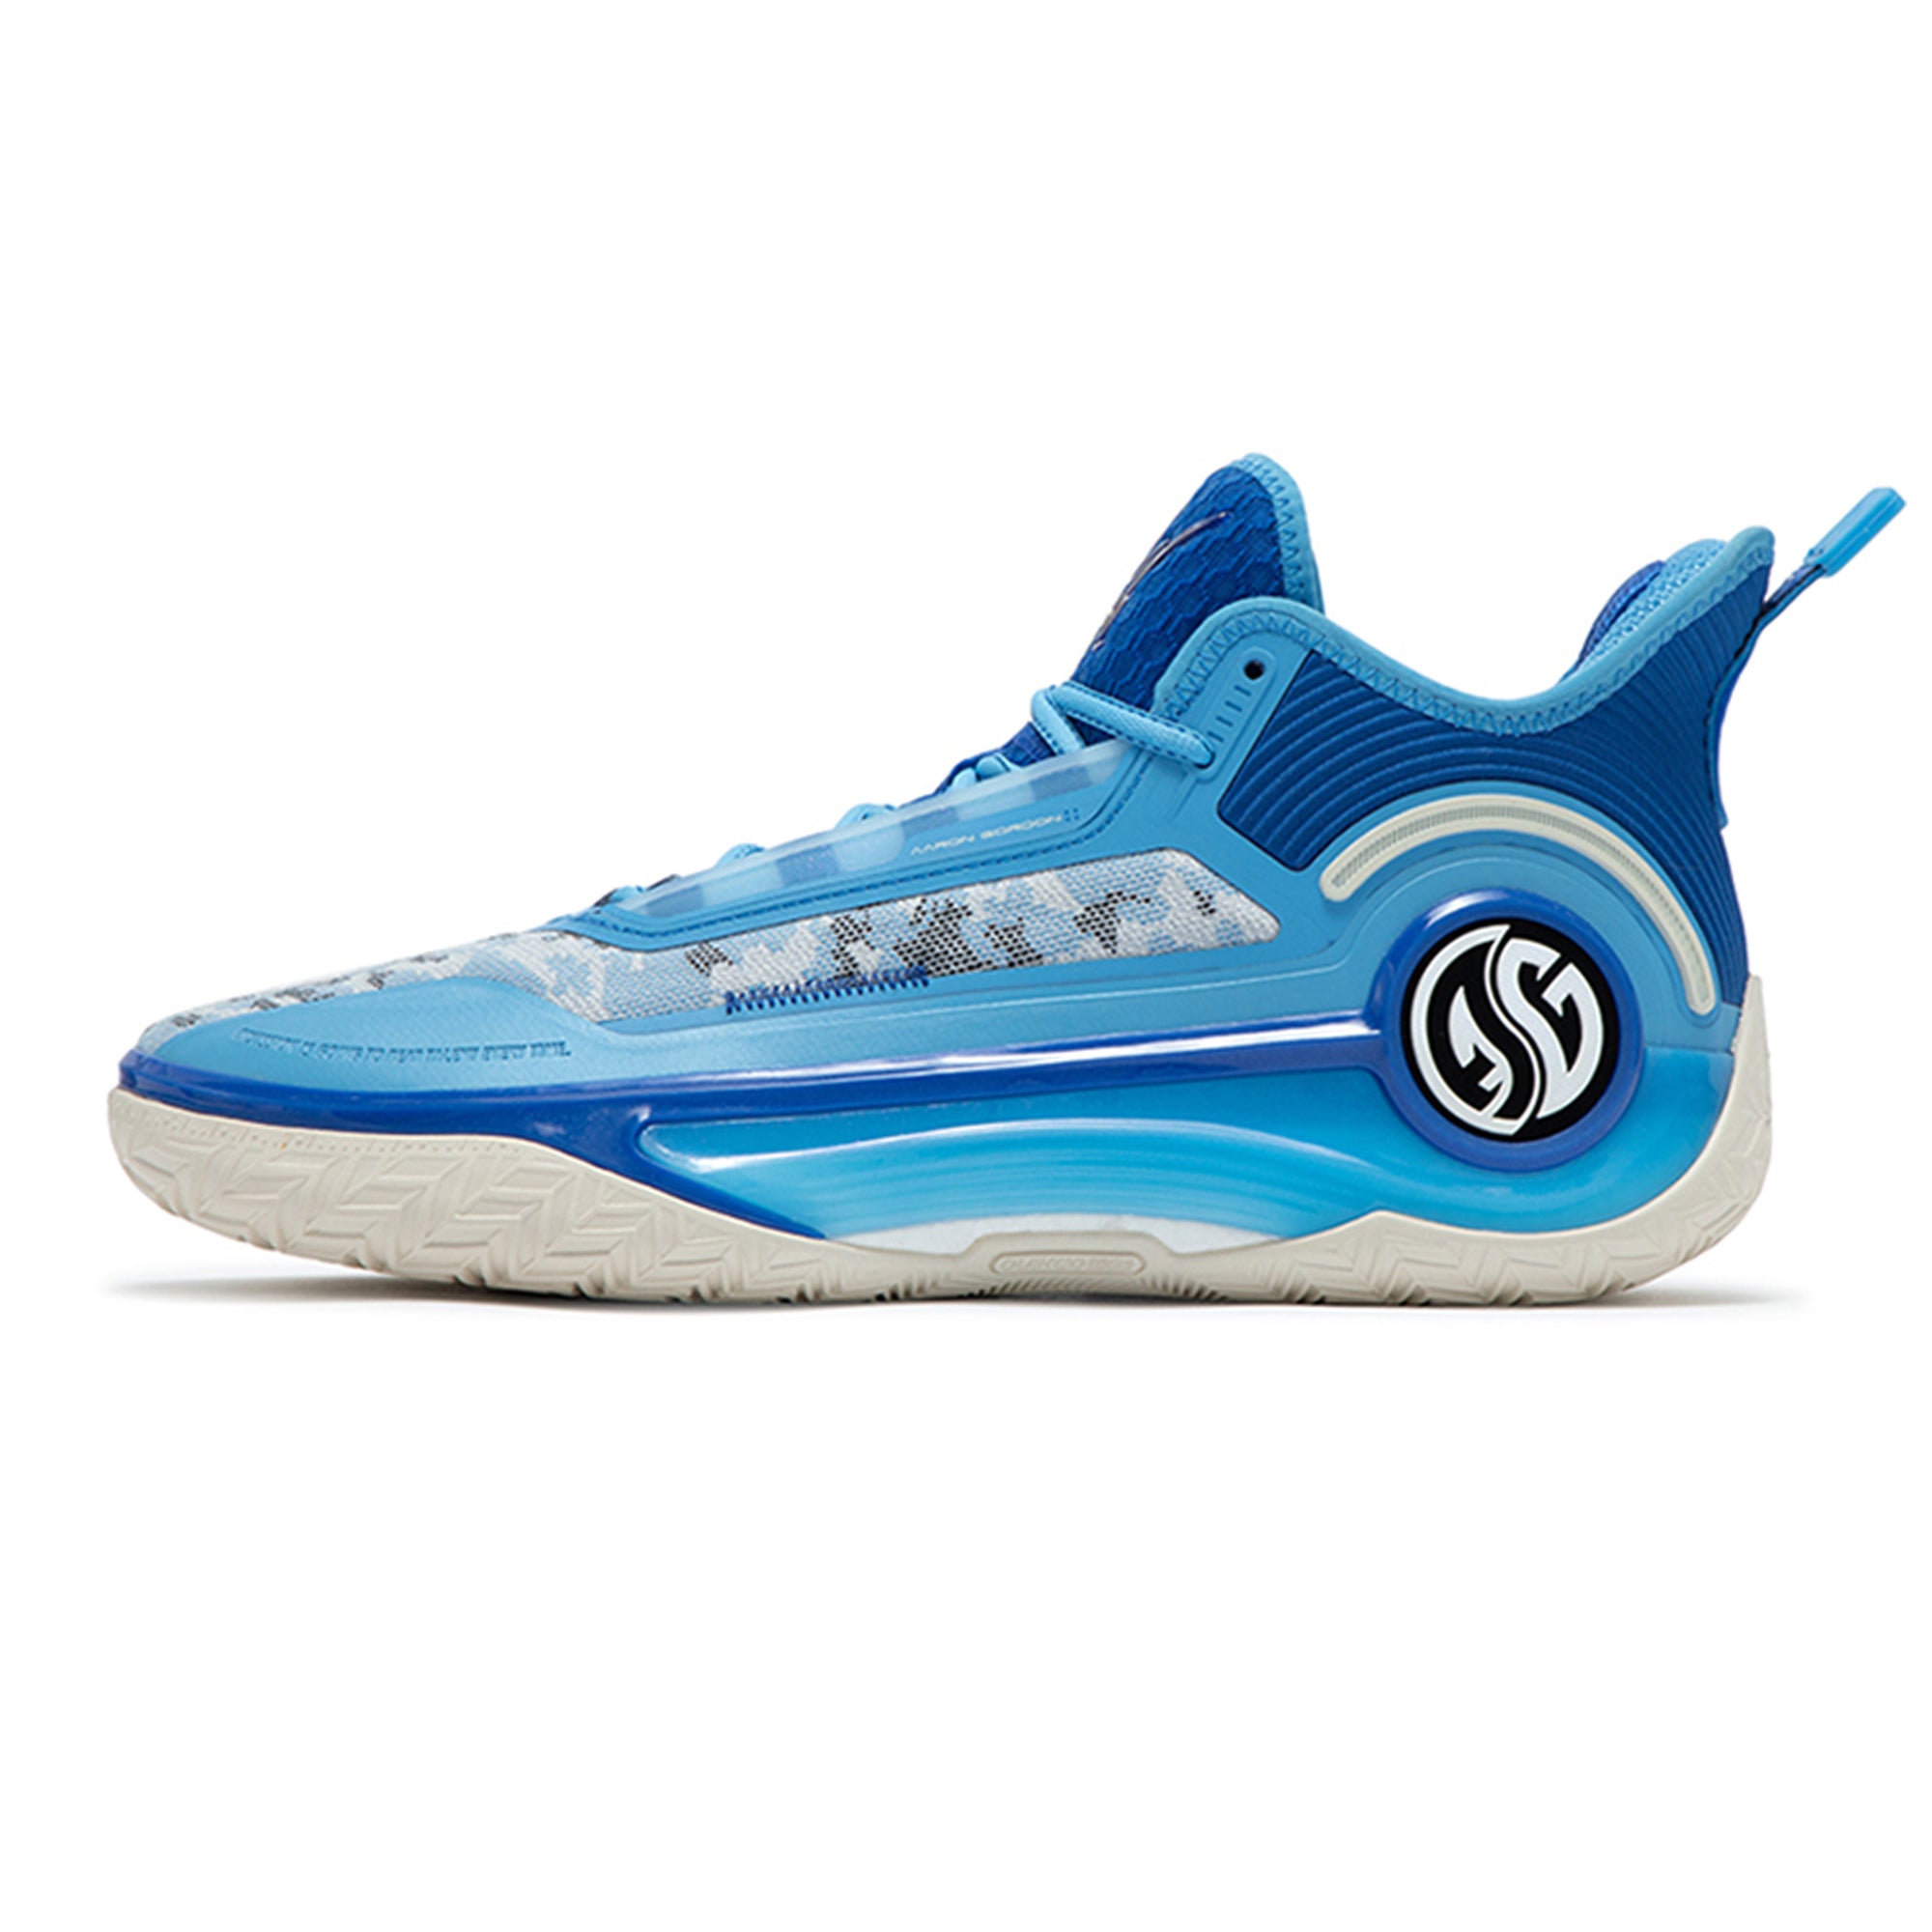 Aaron Gordon NBA Basketball Shoes AG4 Backyard University Blue/Sago